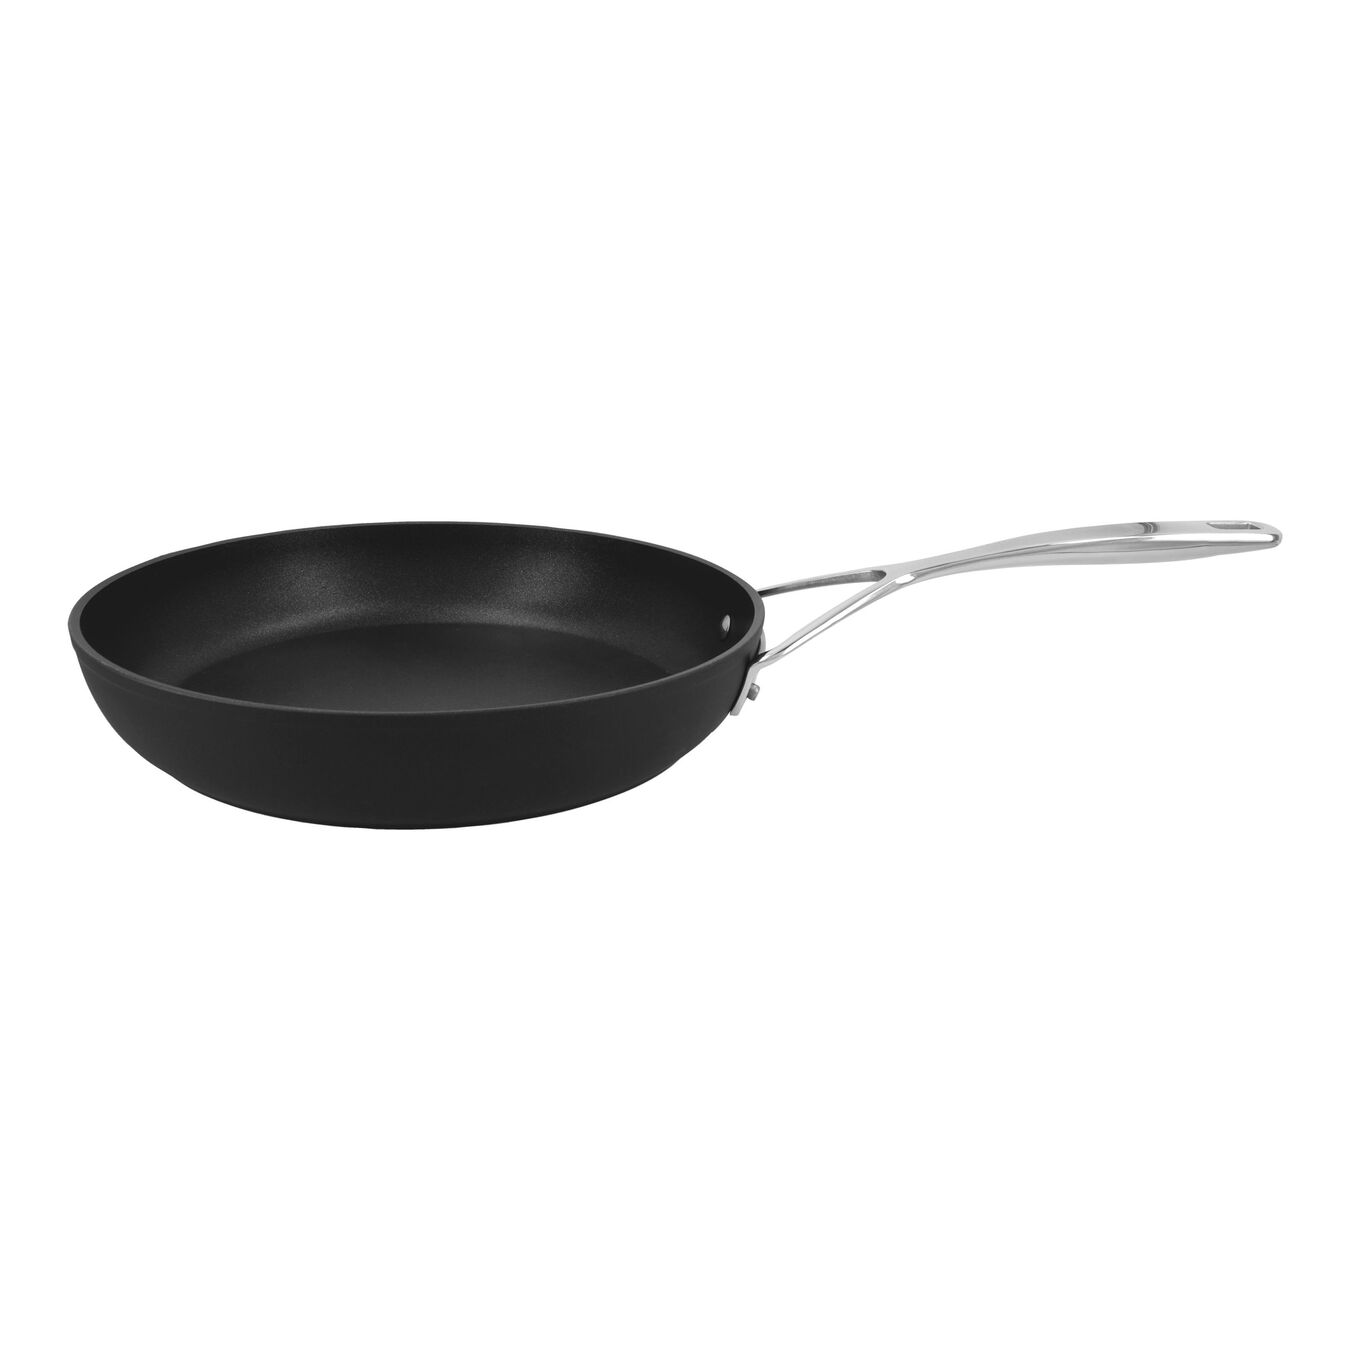 28 cm Aluminum Frying pan silver-black,,large 1